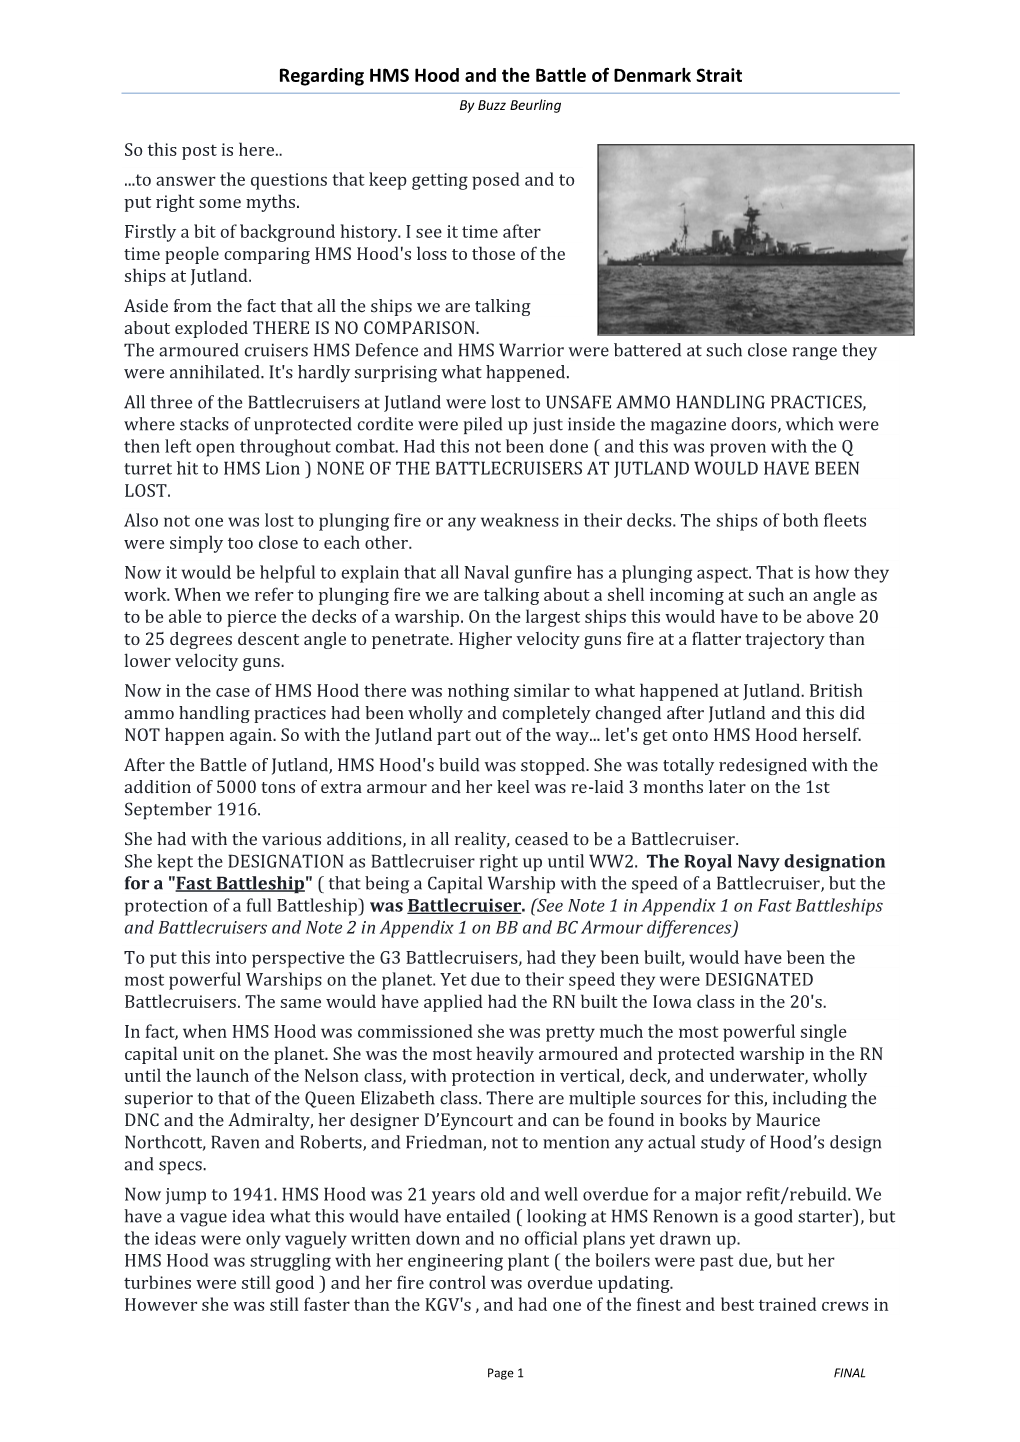 Regarding HMS Hood and the Battle of Denmark Strait by Buzz Beurling